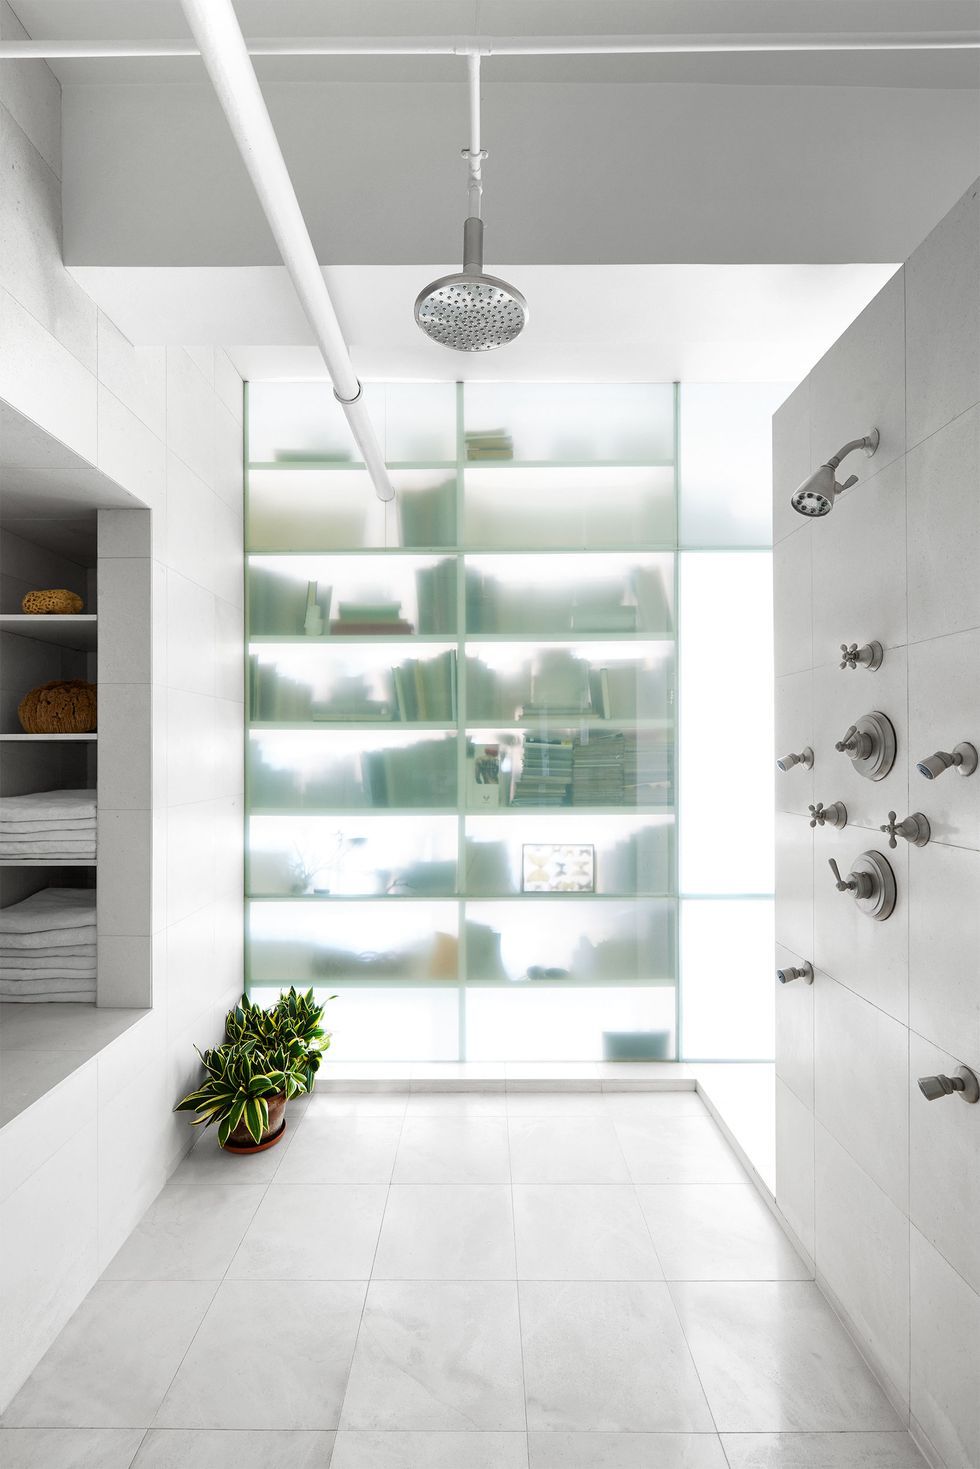 Ideas to Transform Your Bathroom Into A Luxury Home Spa - Latitude Design  Sdn Bhd